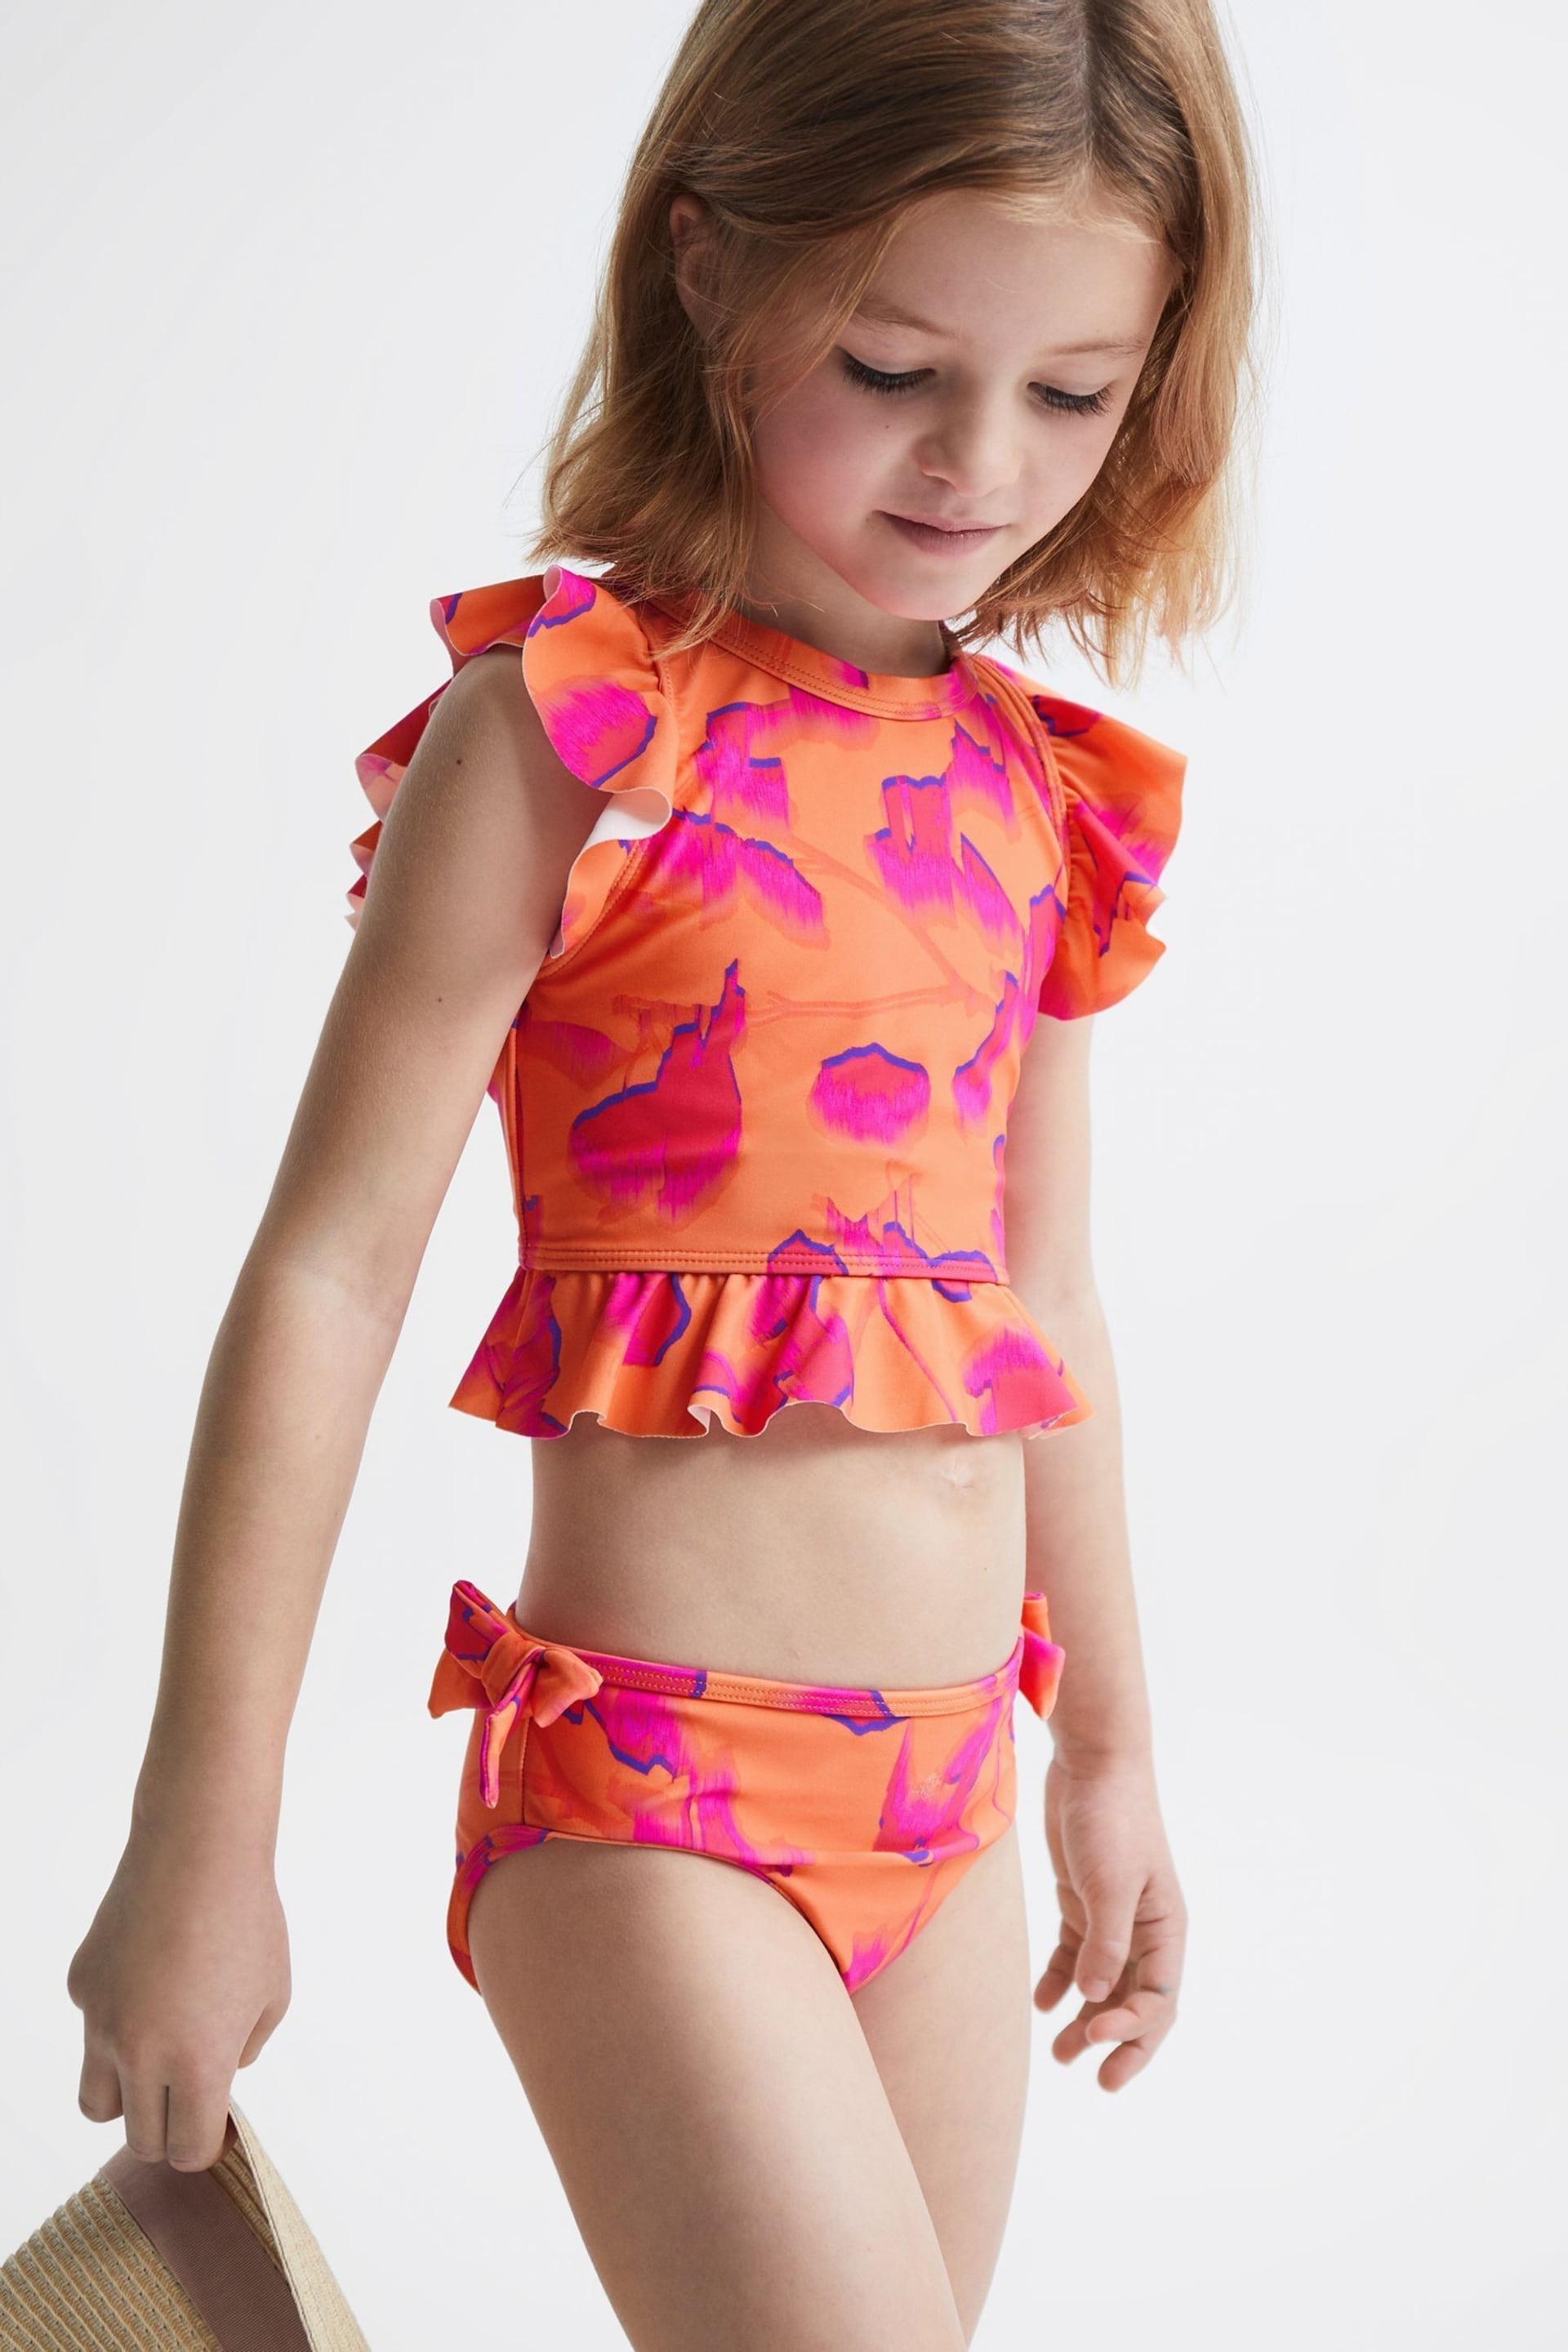 Reiss Orange Print Lilly Junior Floral Bikini Set - Image 1 of 5